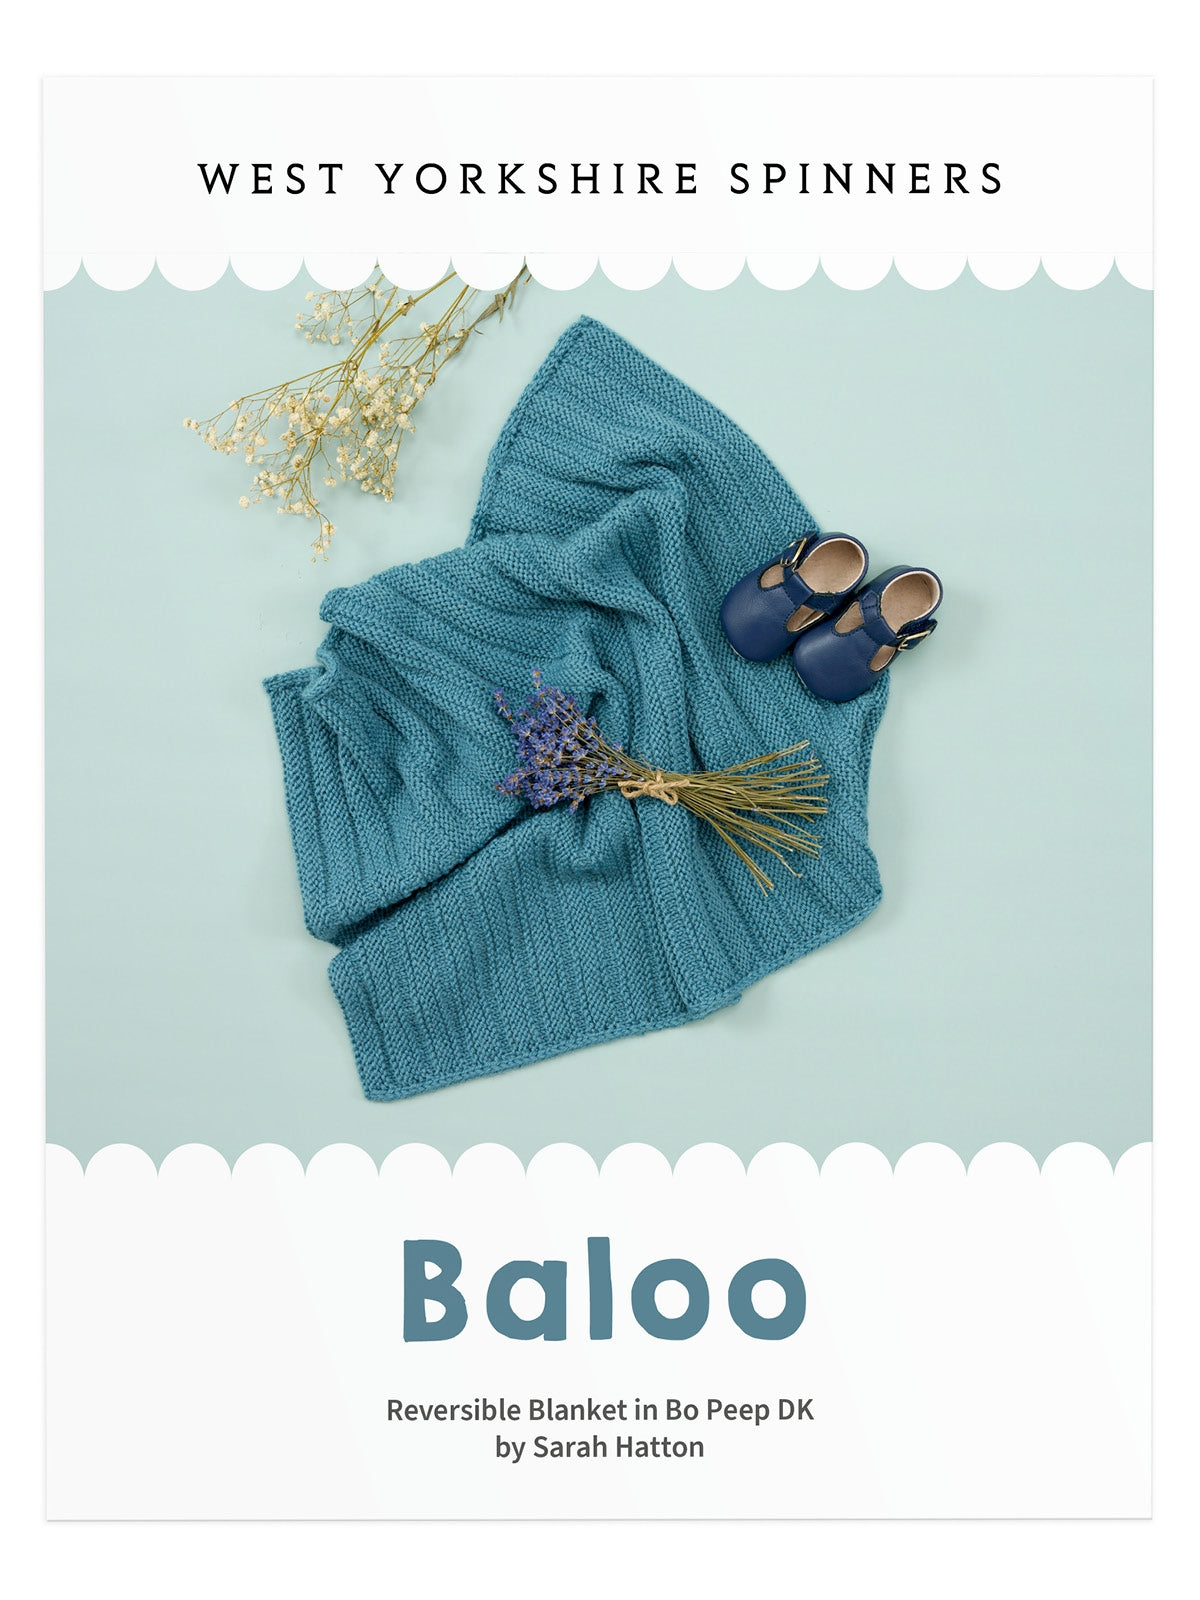 WYS Baloo: Reversible Blanket in Bo Peep DK by Sarah Hatton